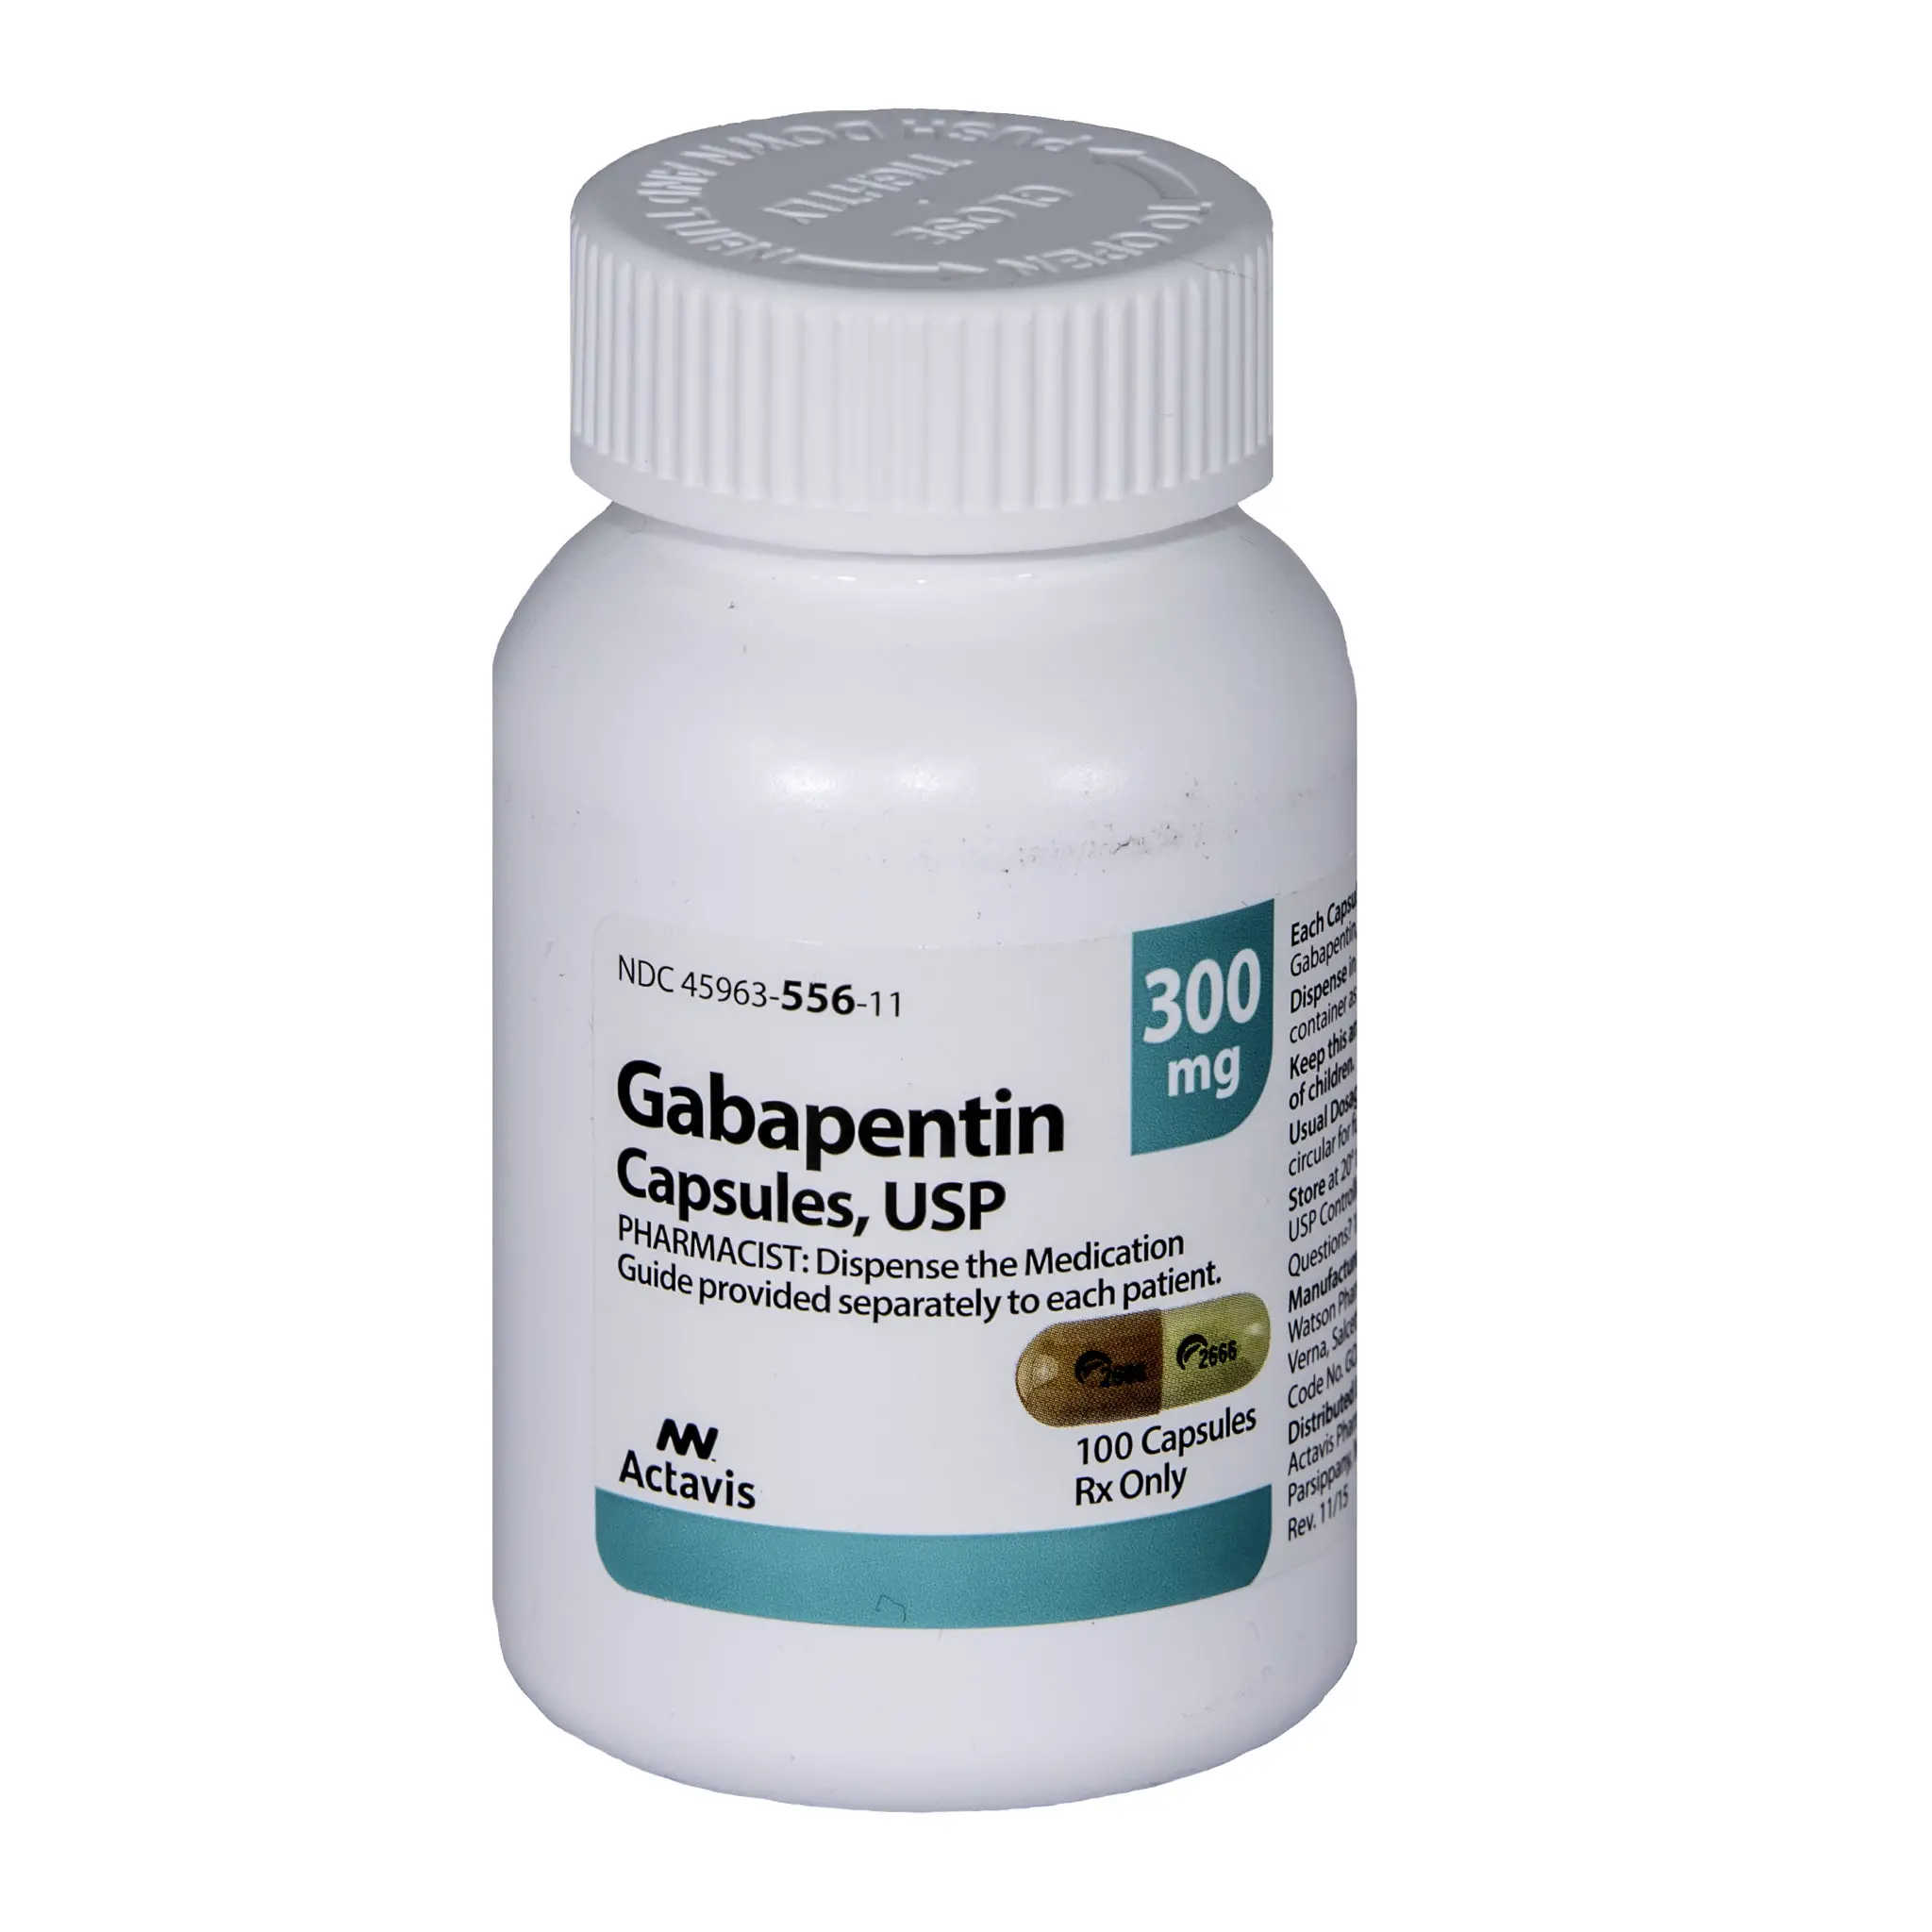 Is Gabapentin (Neurontin) Safe During Pregnancy?